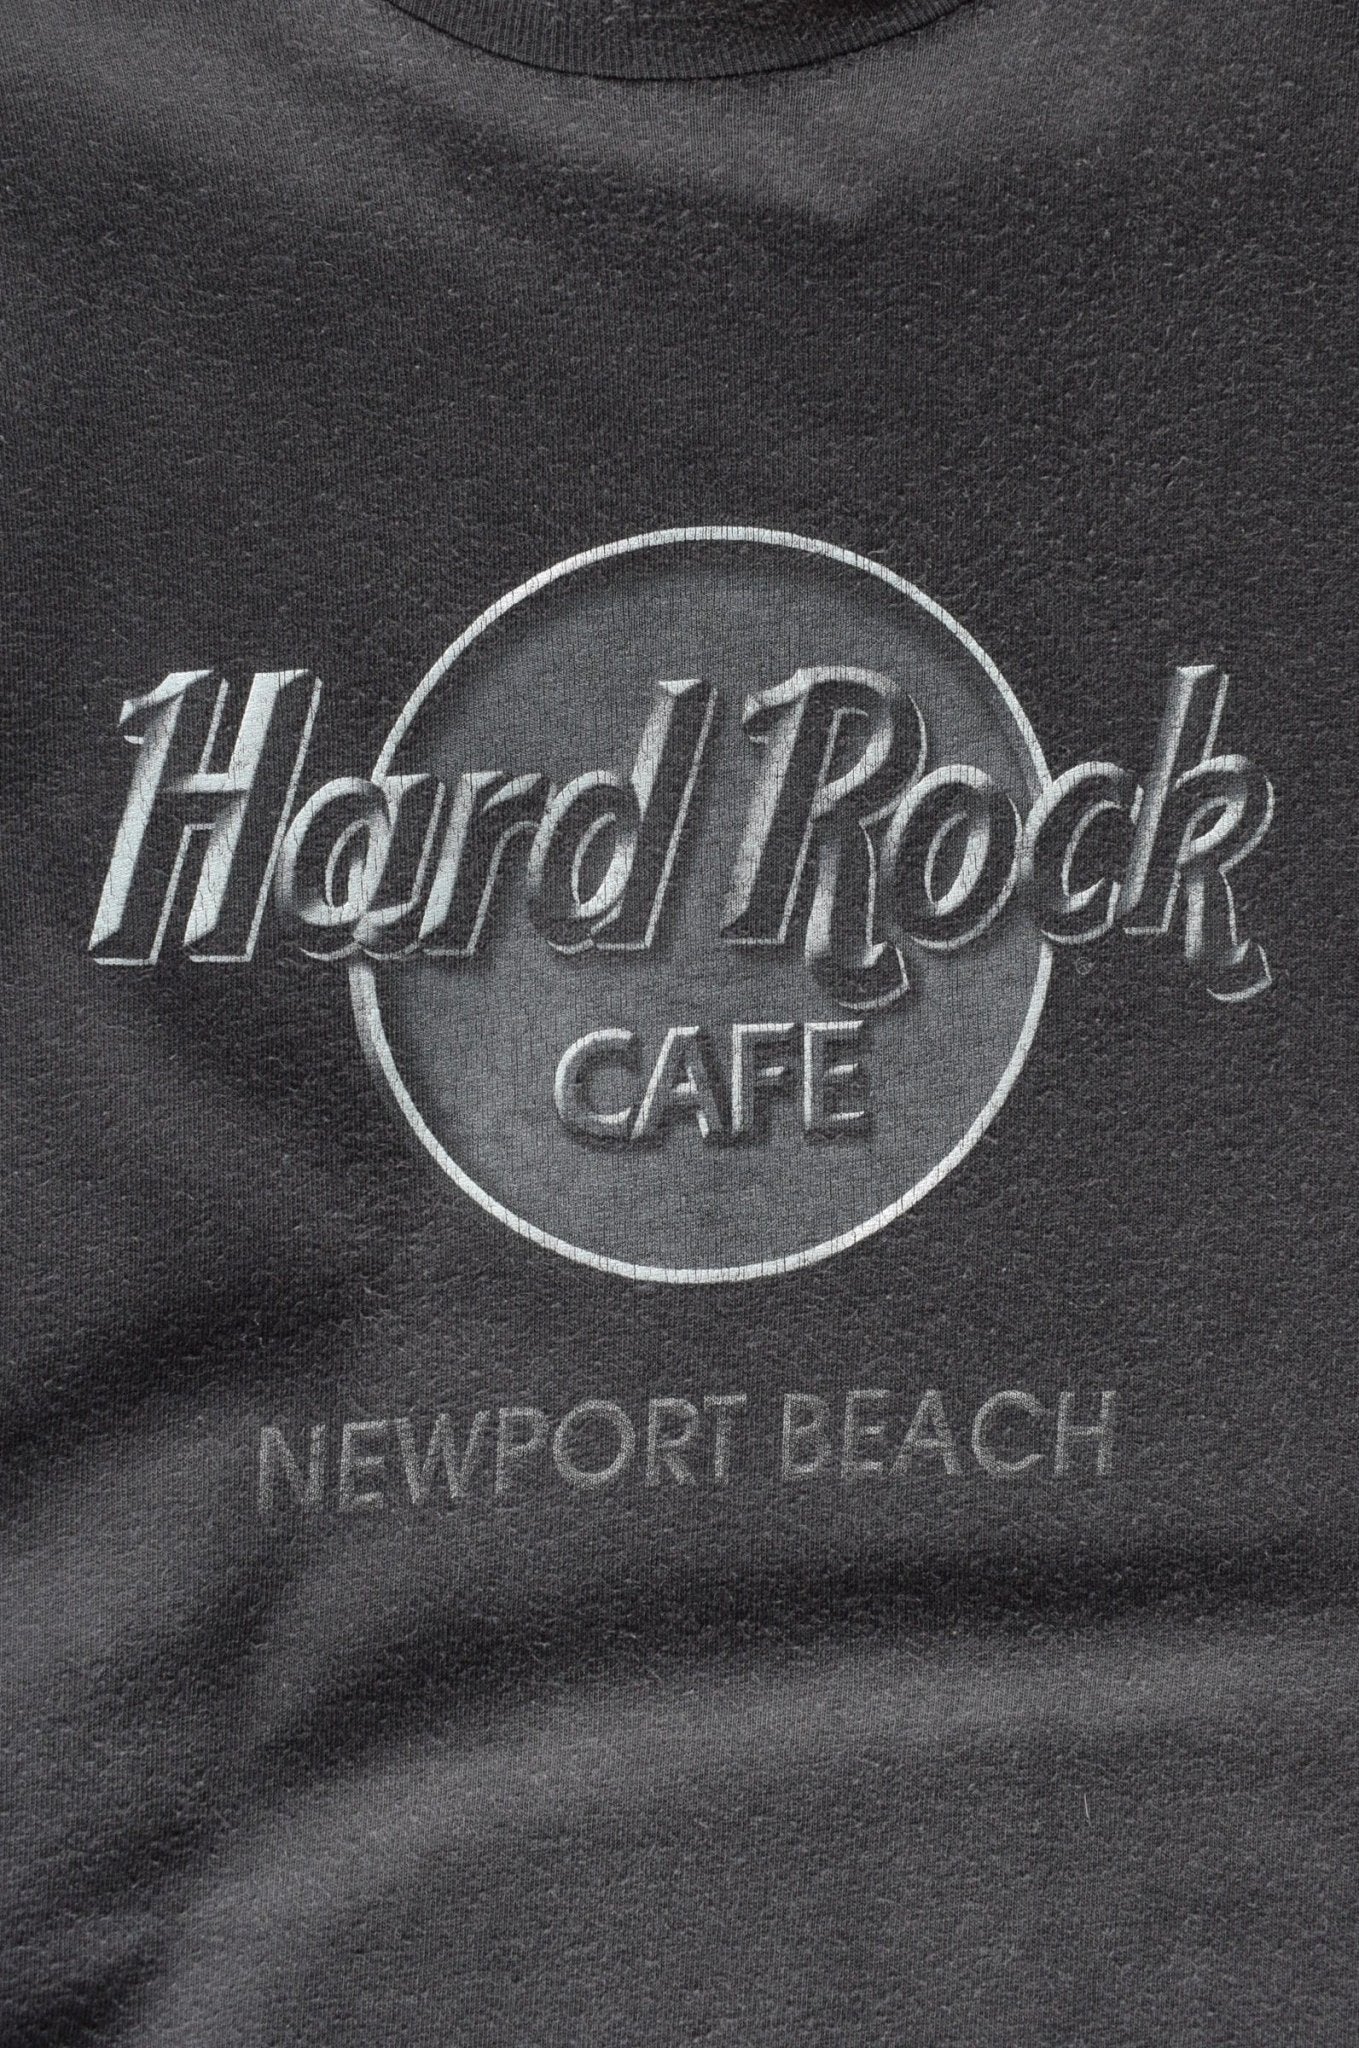 Vintage Hard Rock Cafe Newport Beach Tee (XL) - Retrospective Store